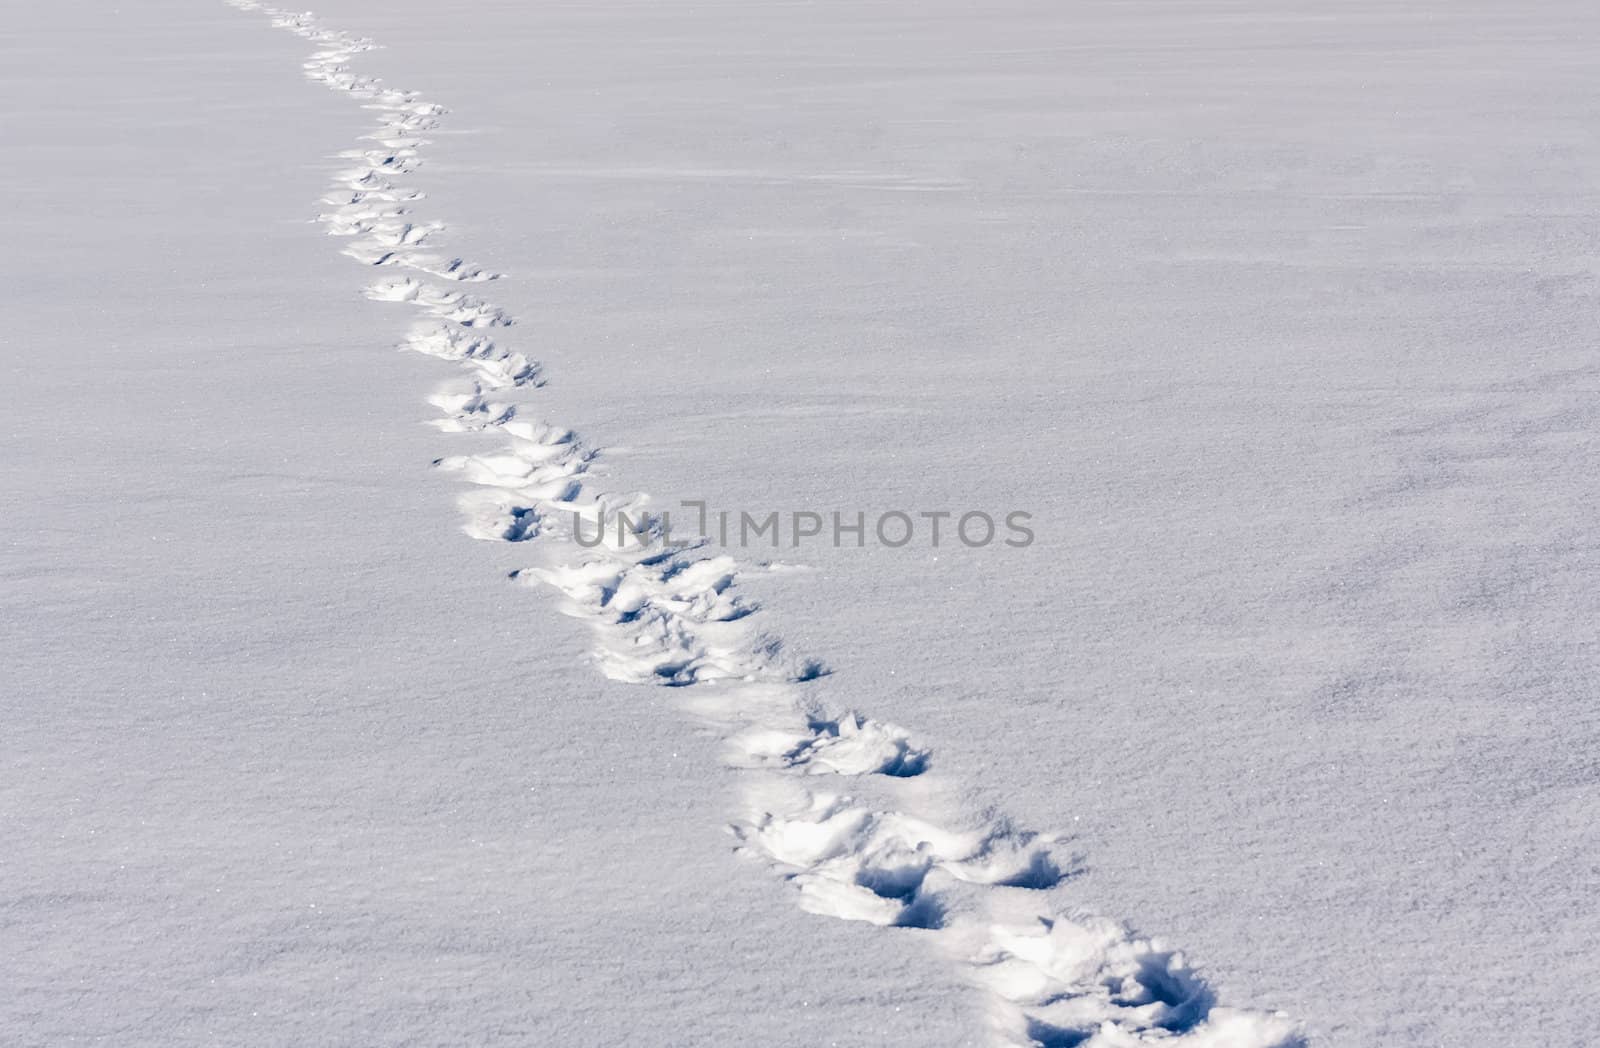 Human Footprints In Deep Snow On Sunny Day